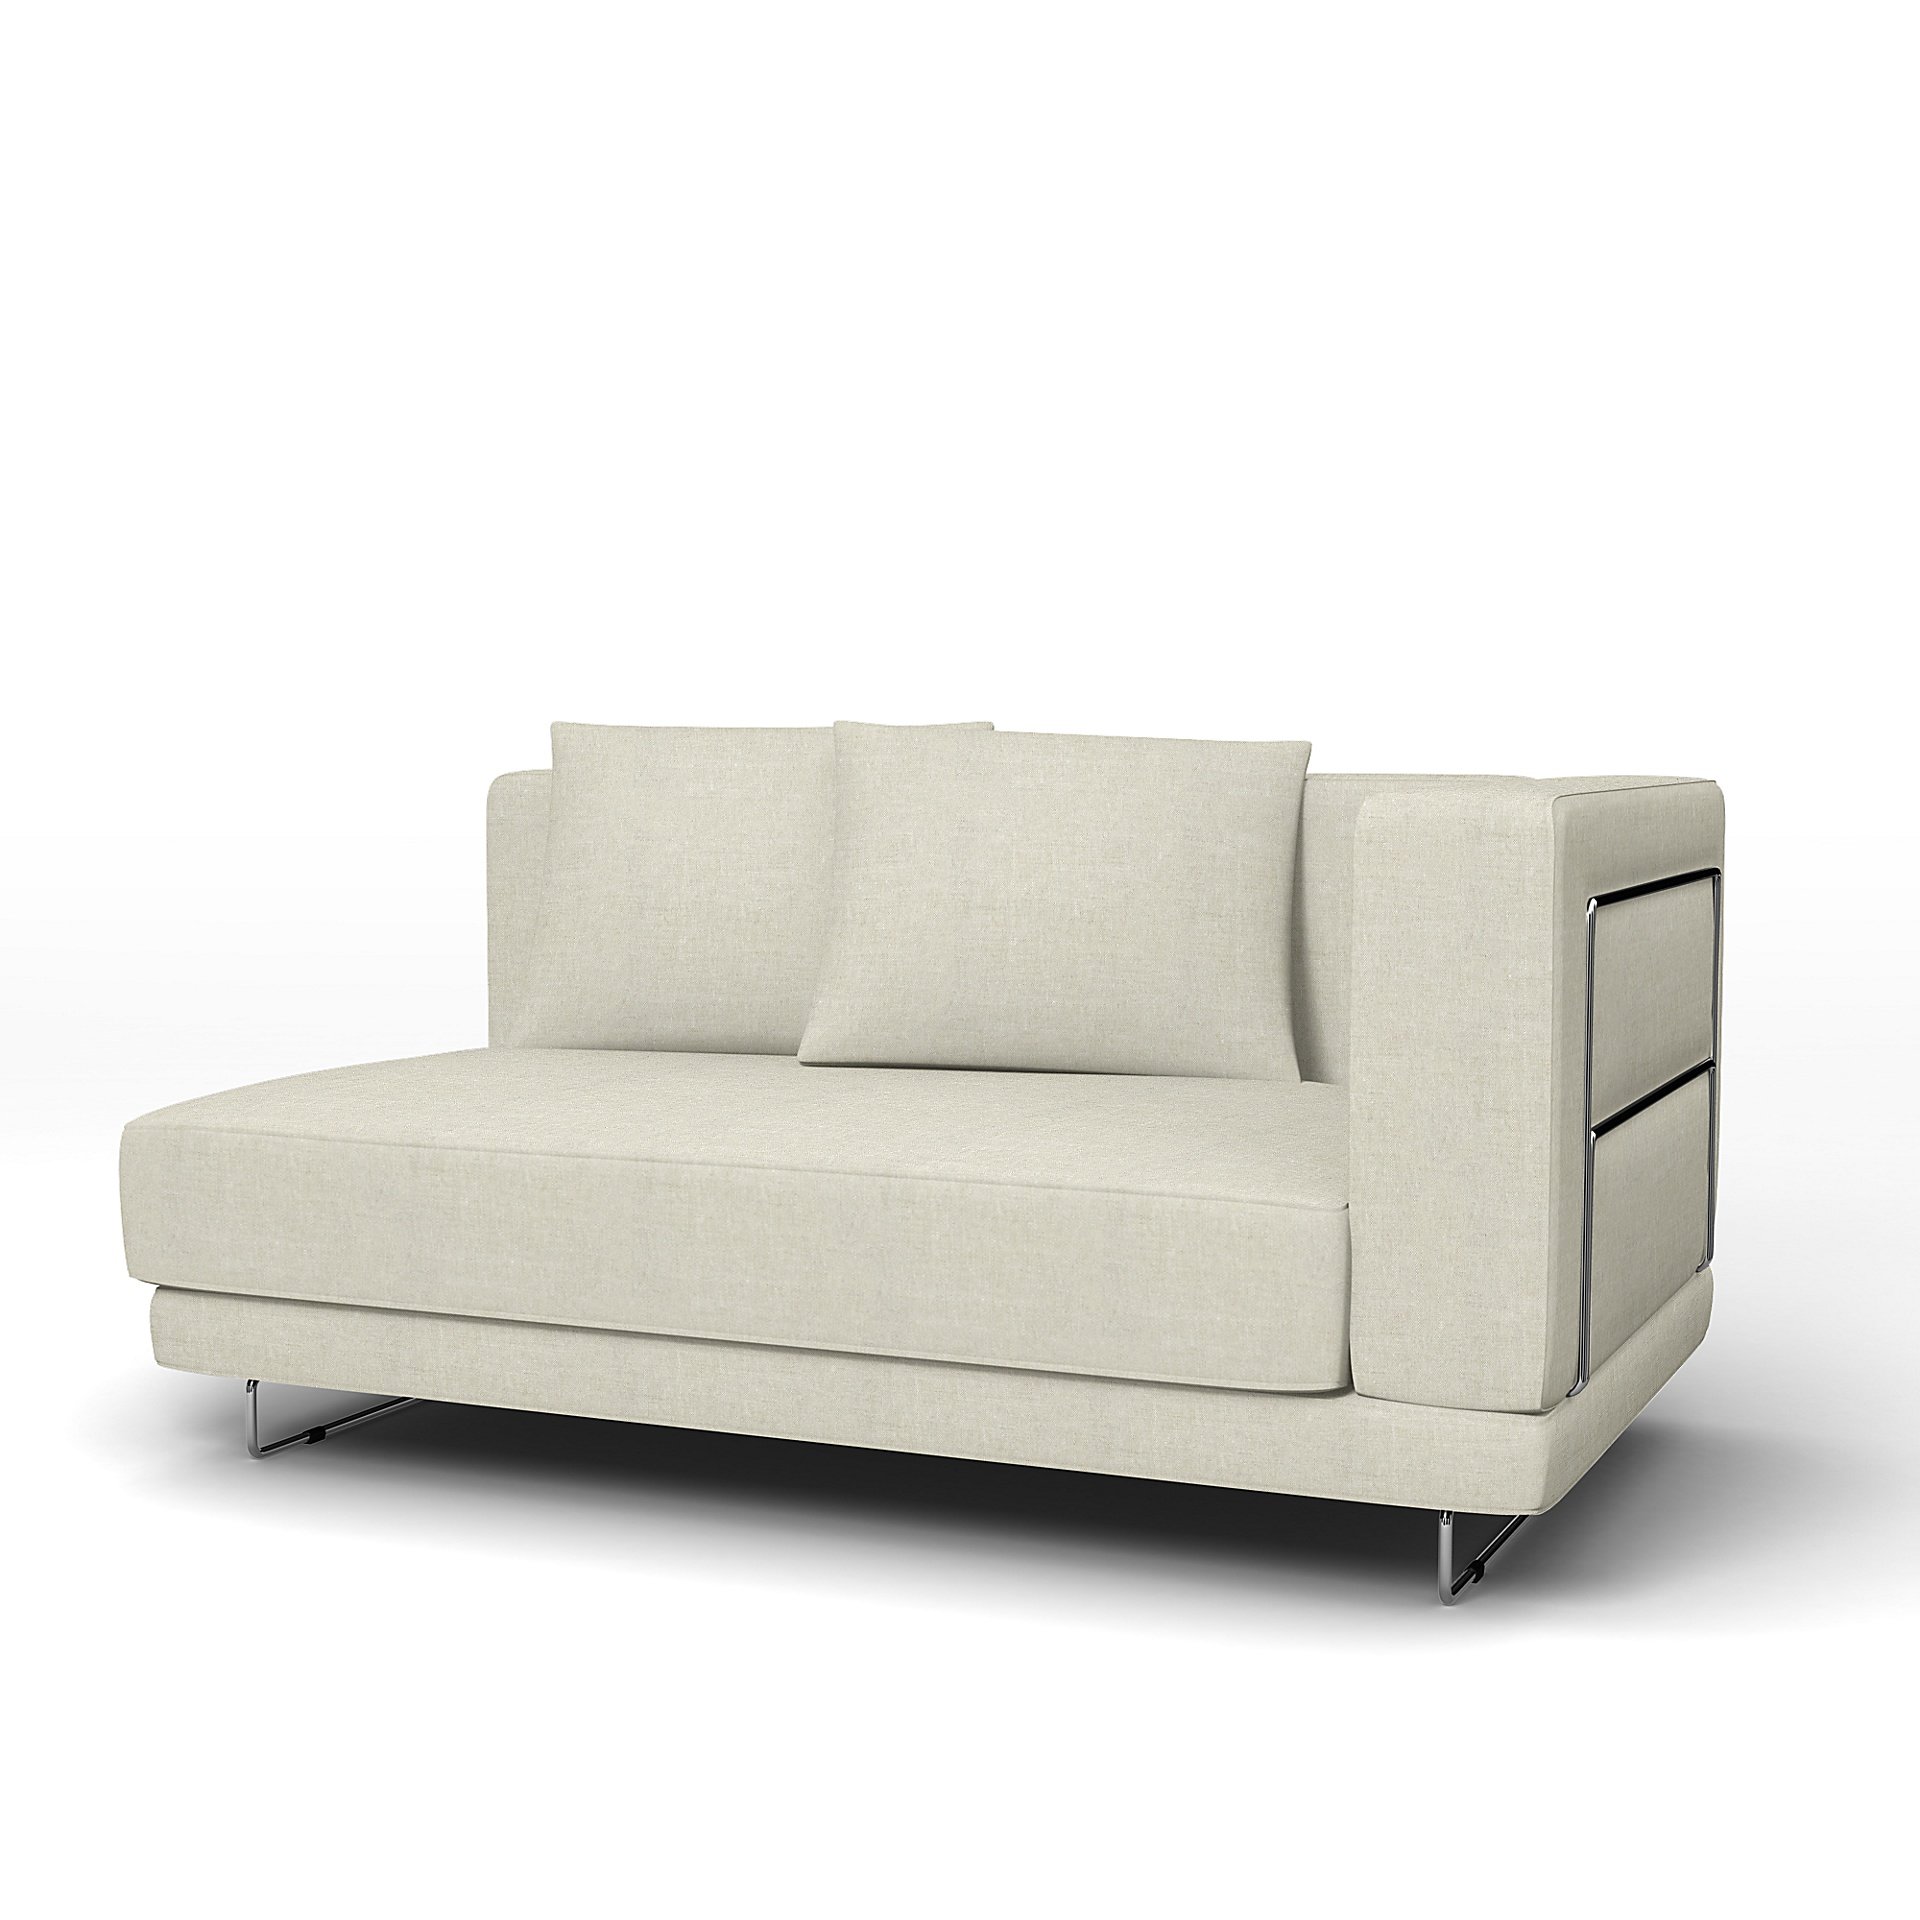 IKEA - Tylosand Sofa with Armrest Cover, Natural, Linen - Bemz